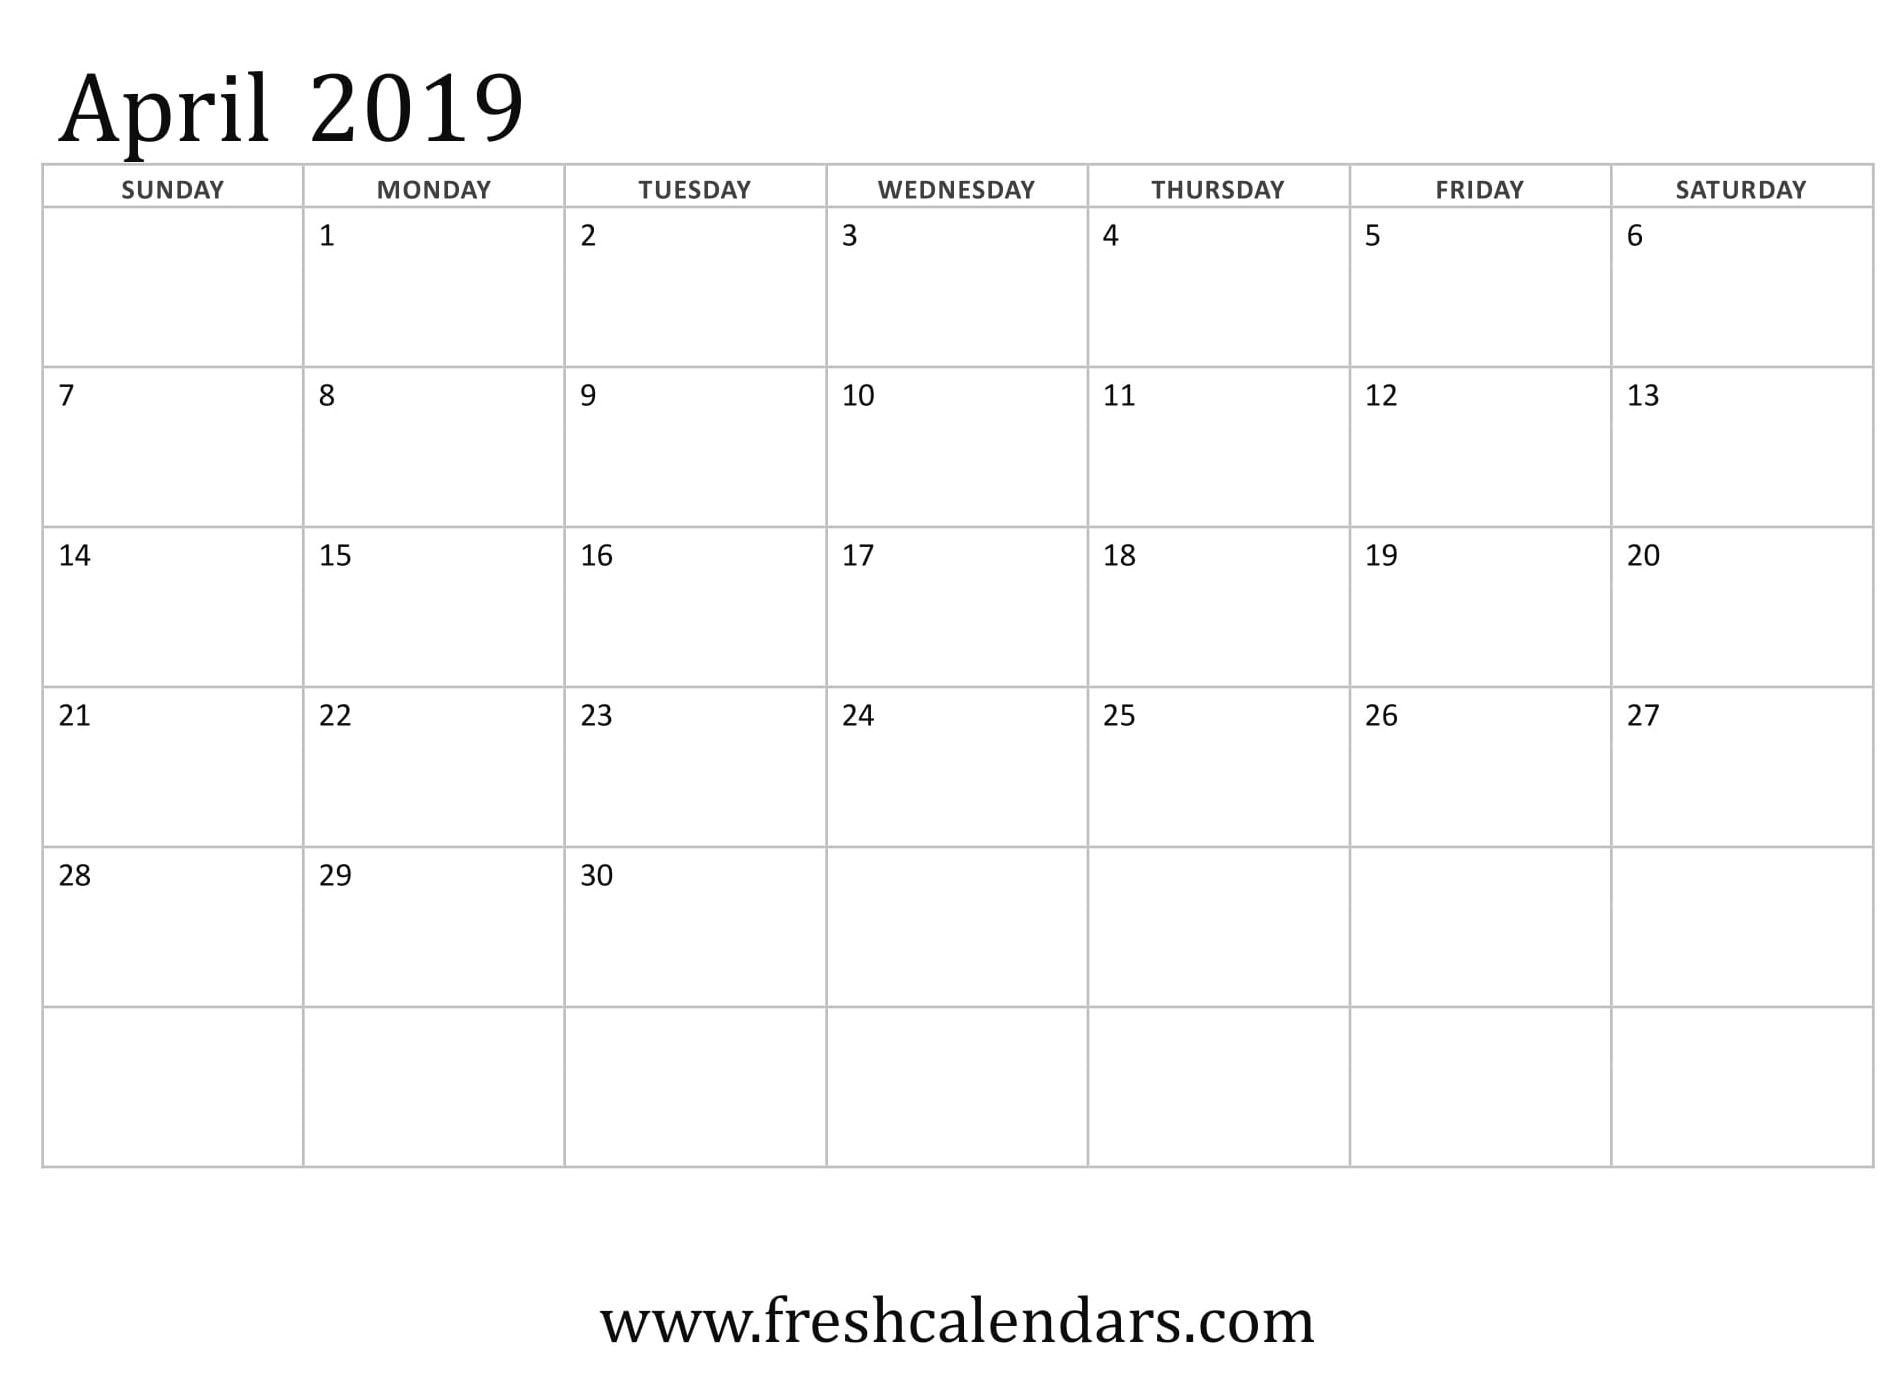 April 2019 Calendar Printable1900 x 1400